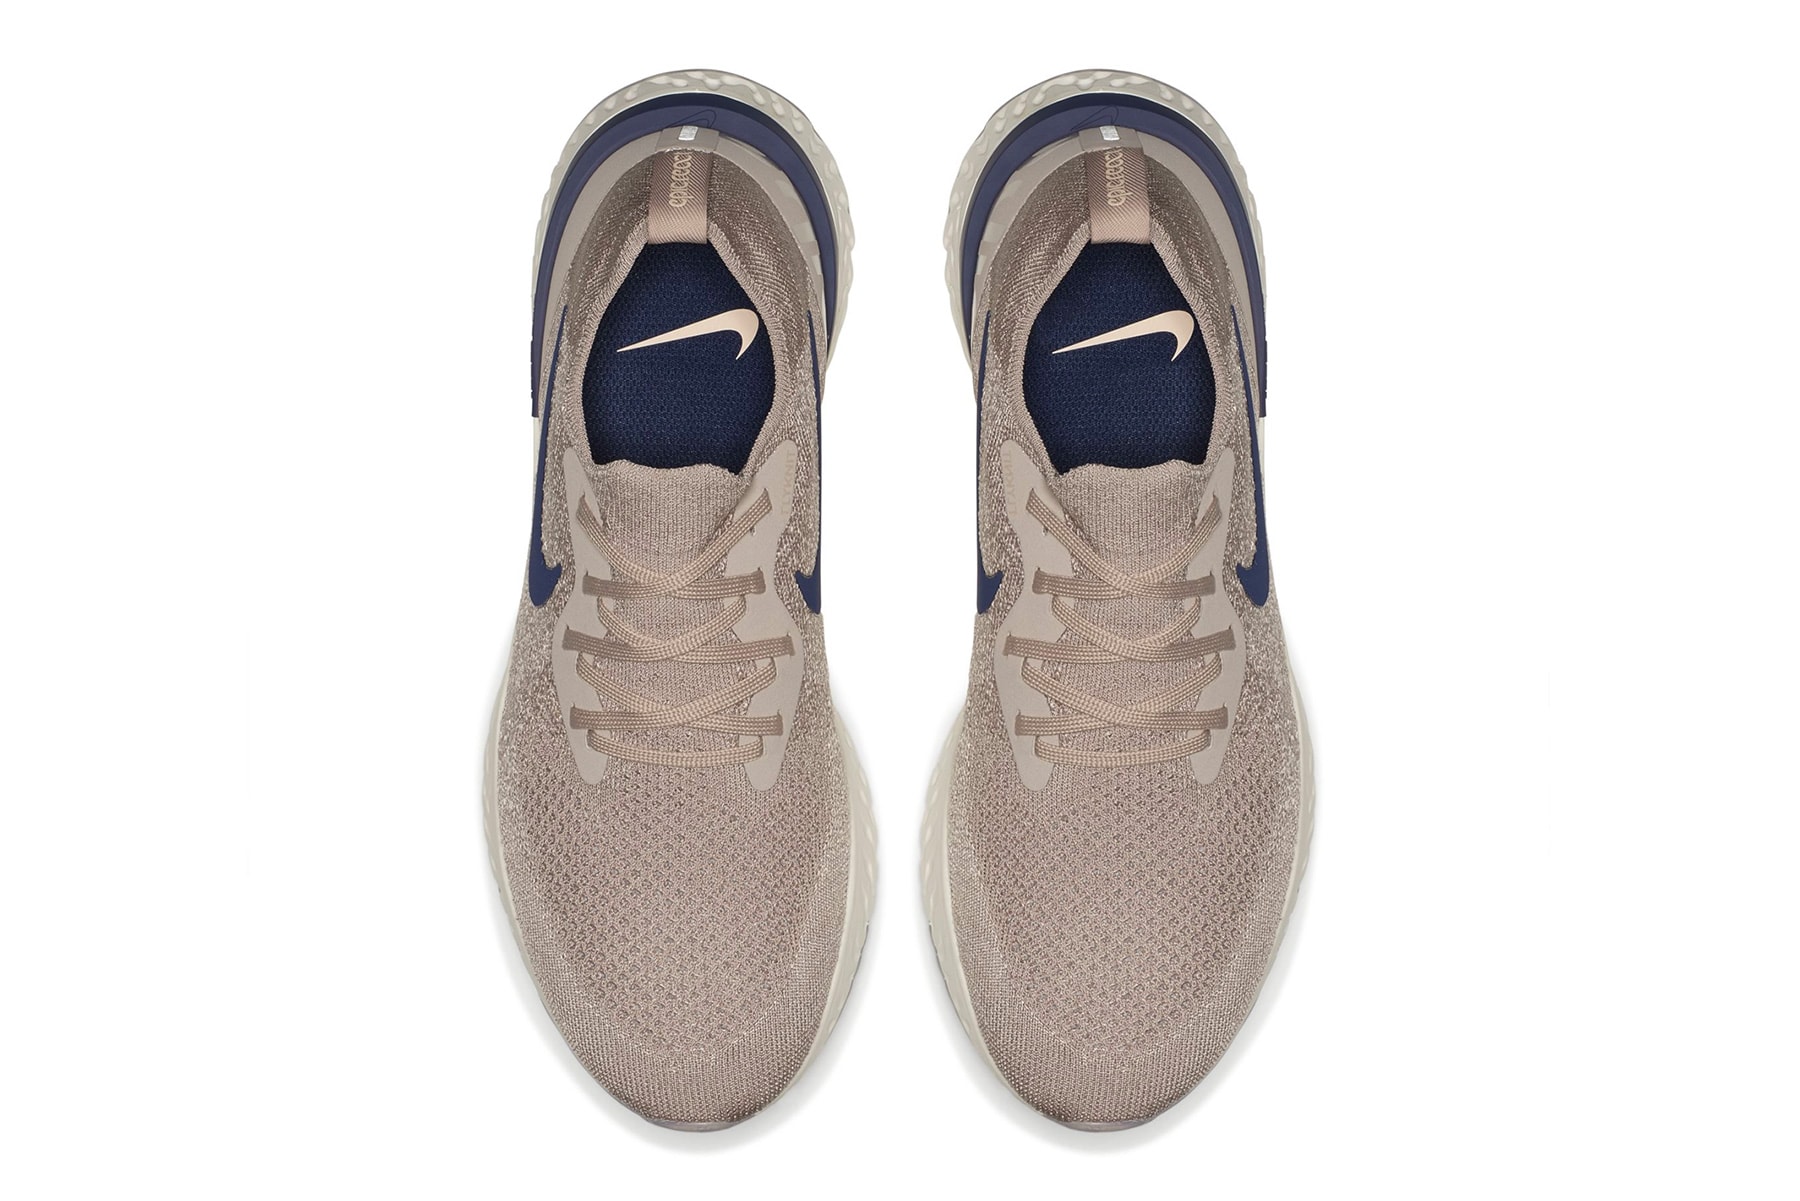 Nike Epic React Flyknit "Tan/Navy" Colorway release date first look price beige blue neutral sneaker